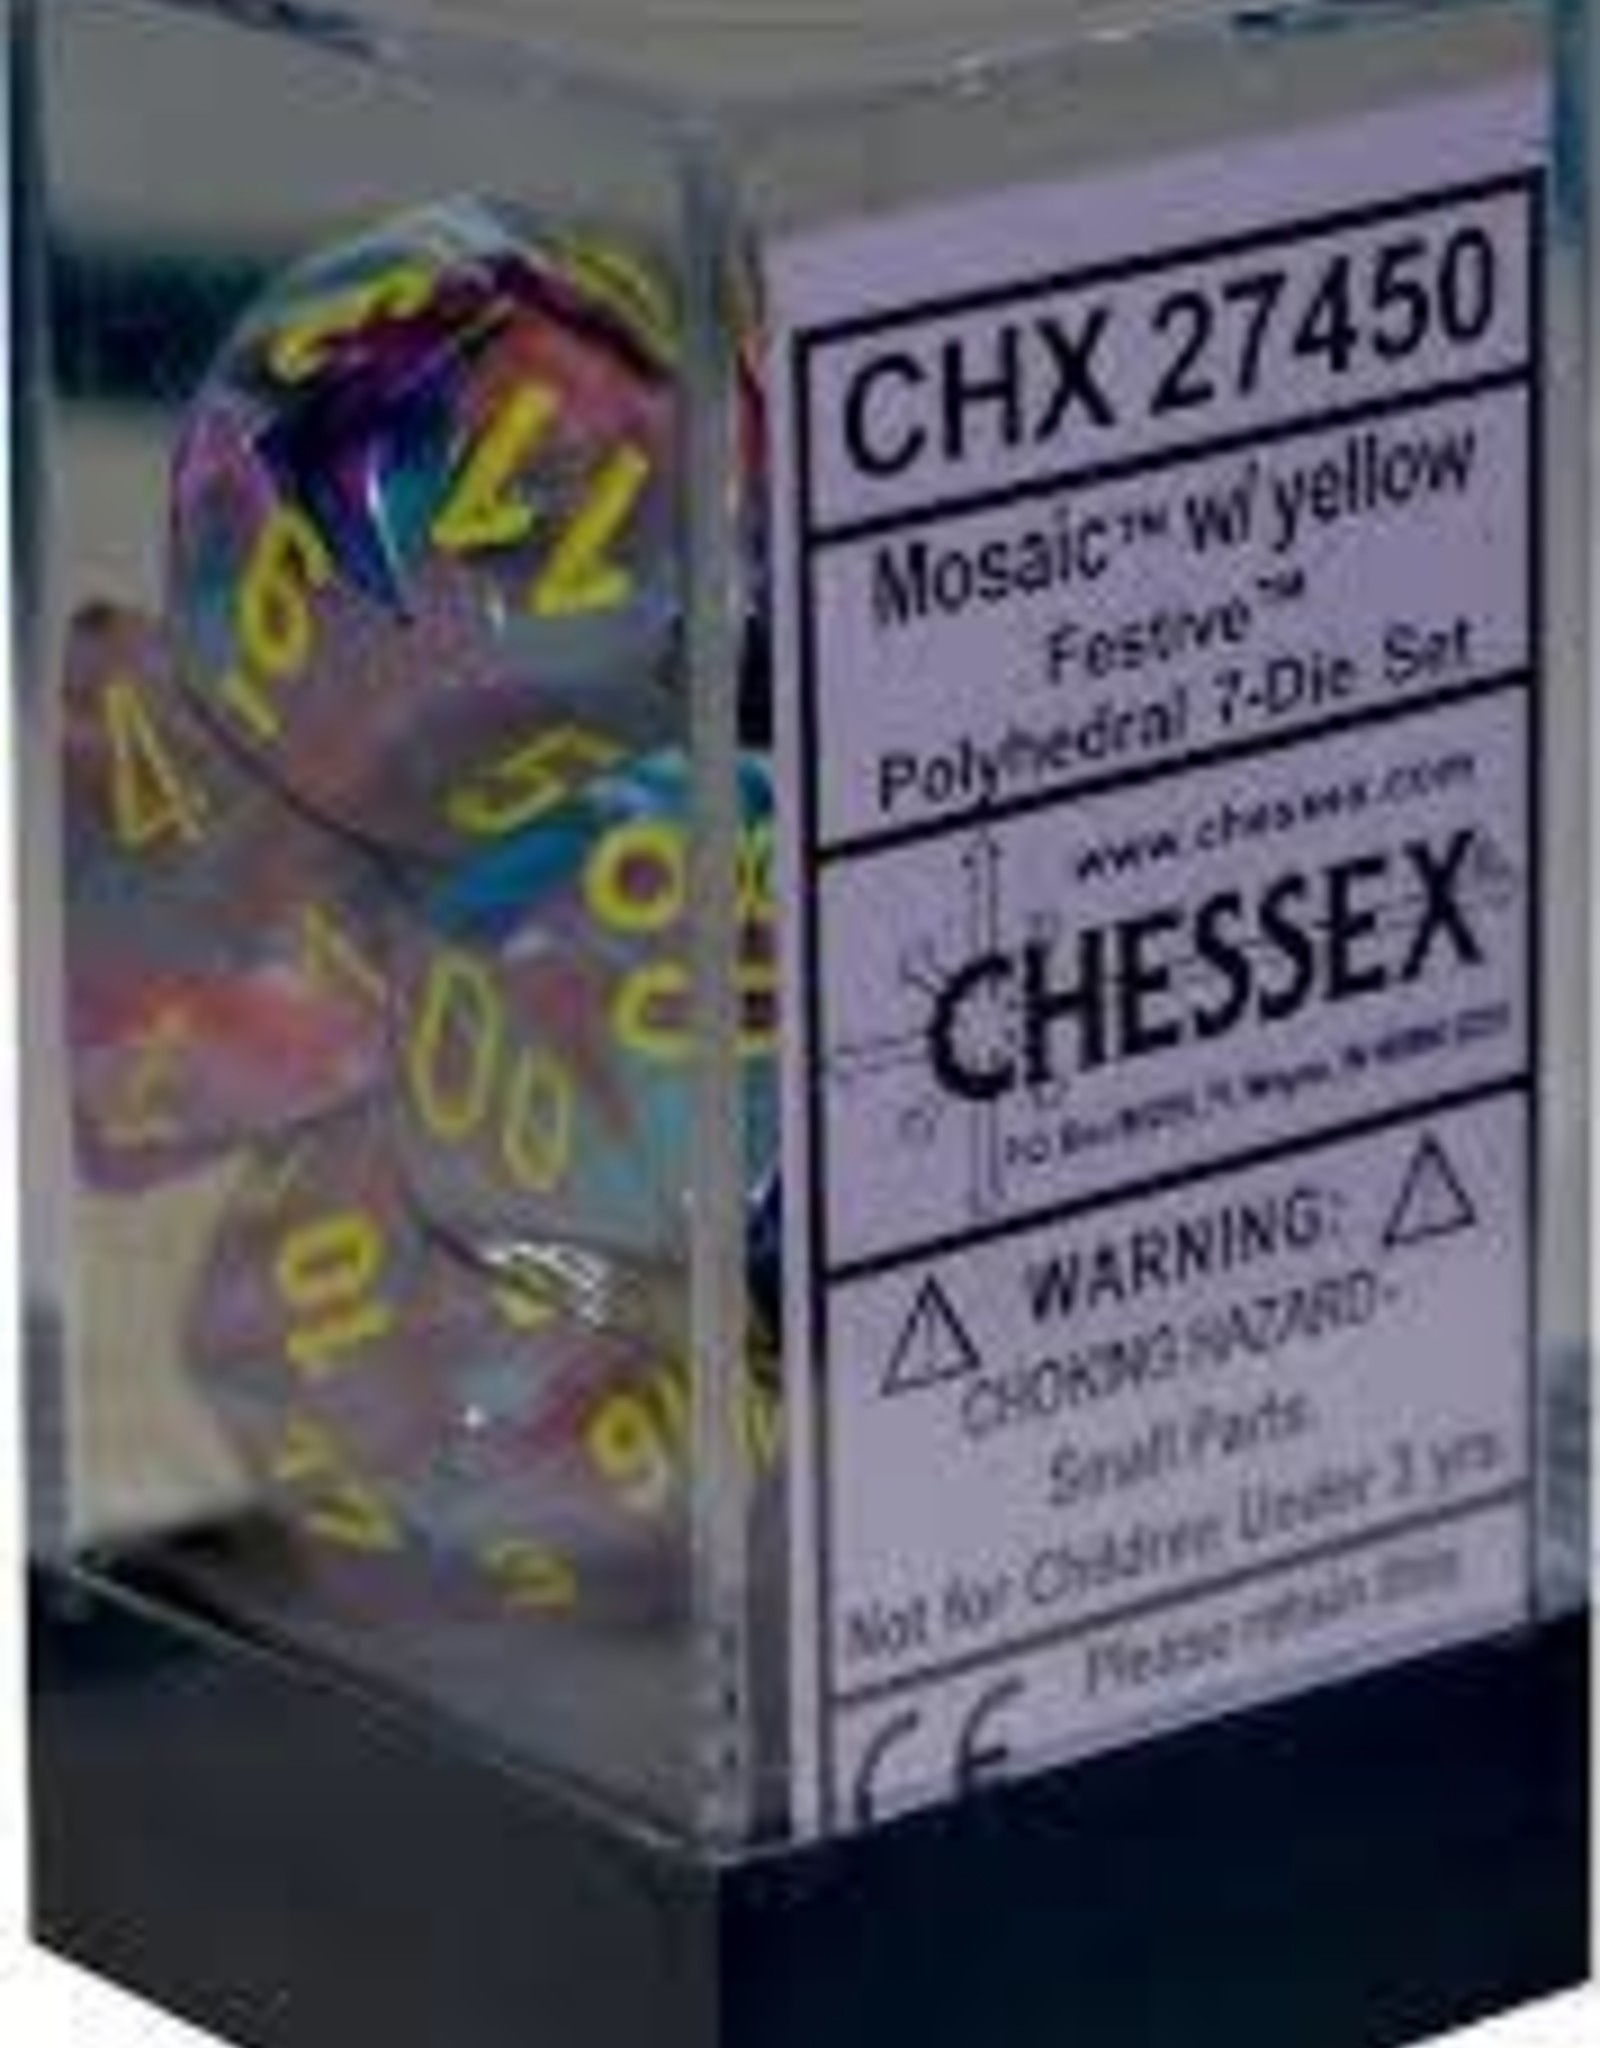 Chessex 7Ct Dice Set CHX27450 Festive Mosaic/Yellow